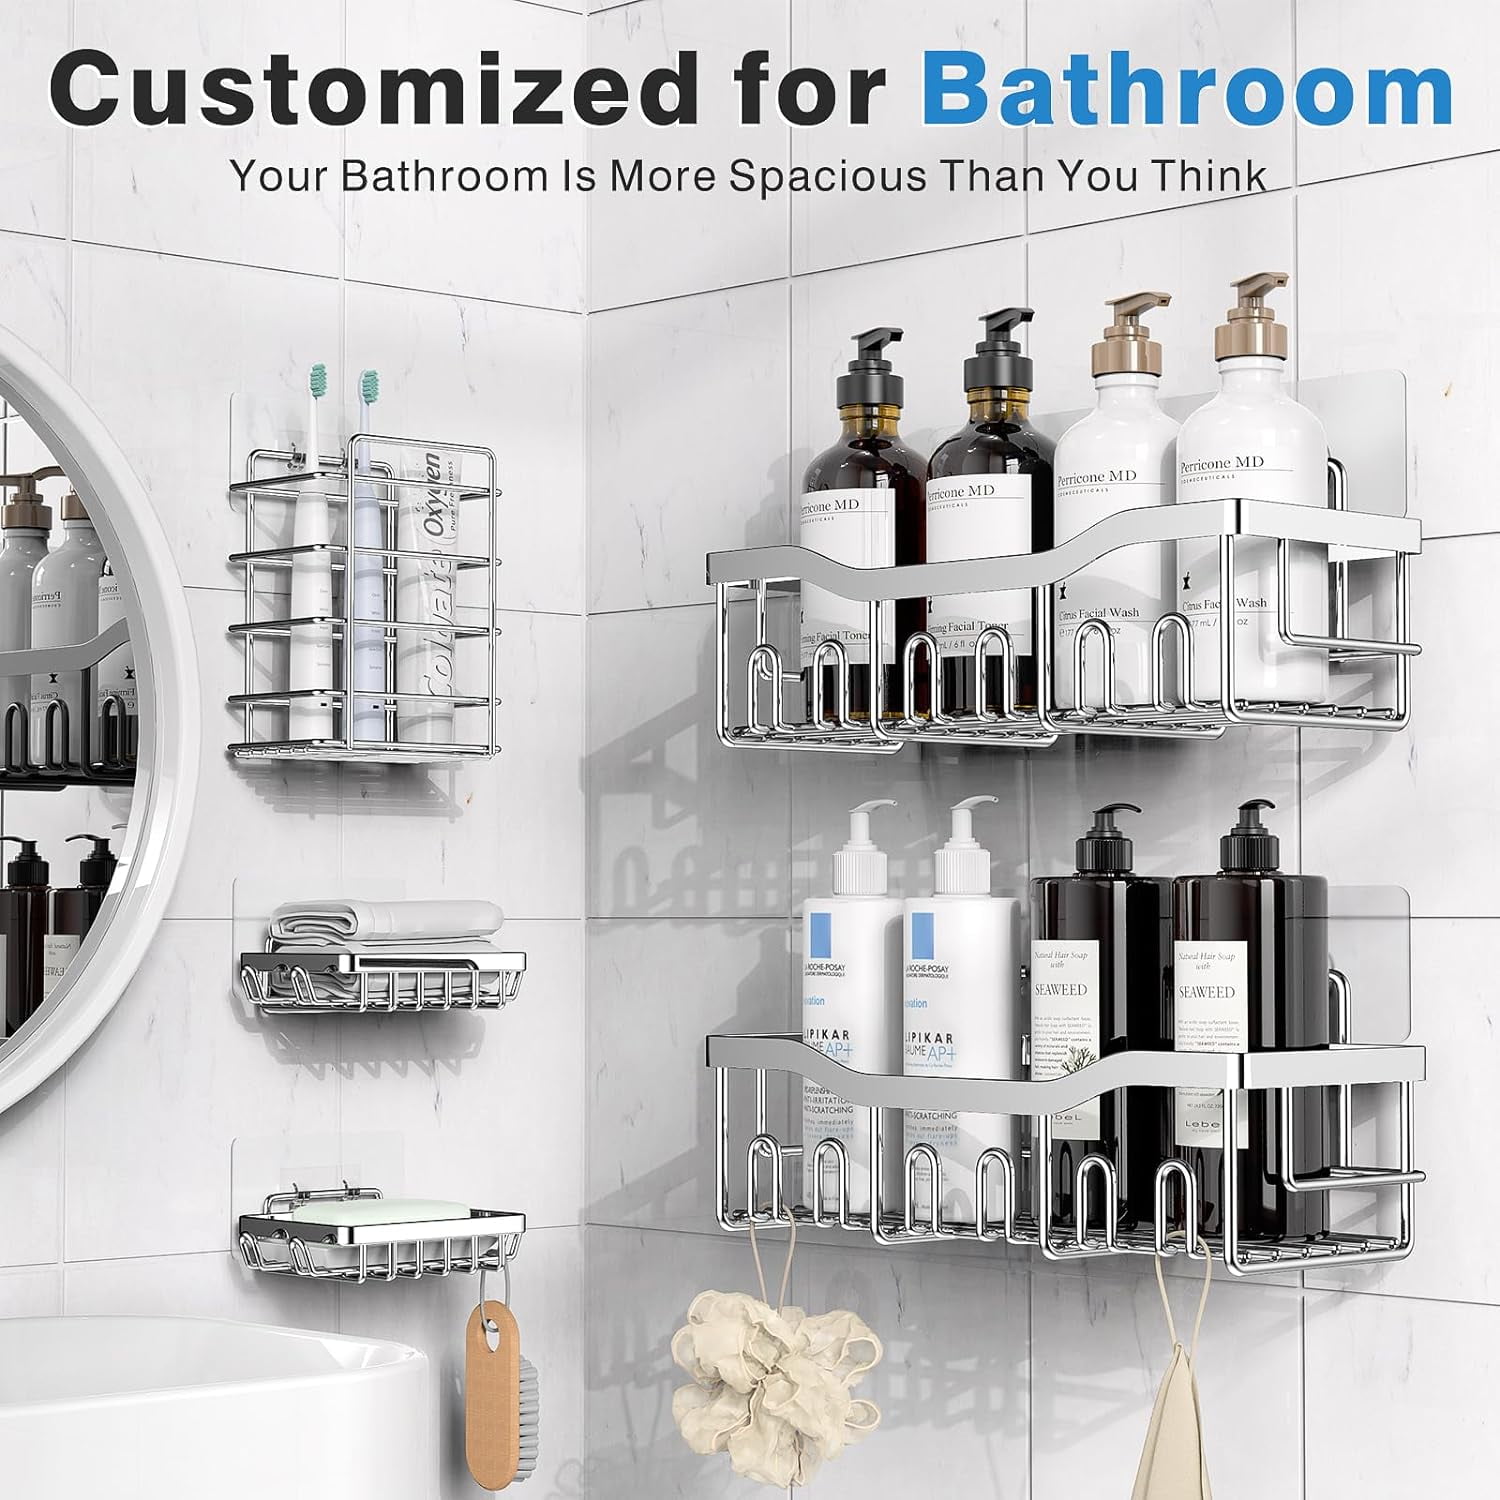 Coraje Shower Caddy, Shower Shelves [5-Pack], Adhesive Shower Organizer No  Drilling, Large Capacity, Rustproof Stainless Steel Bathroom Shower Shelf